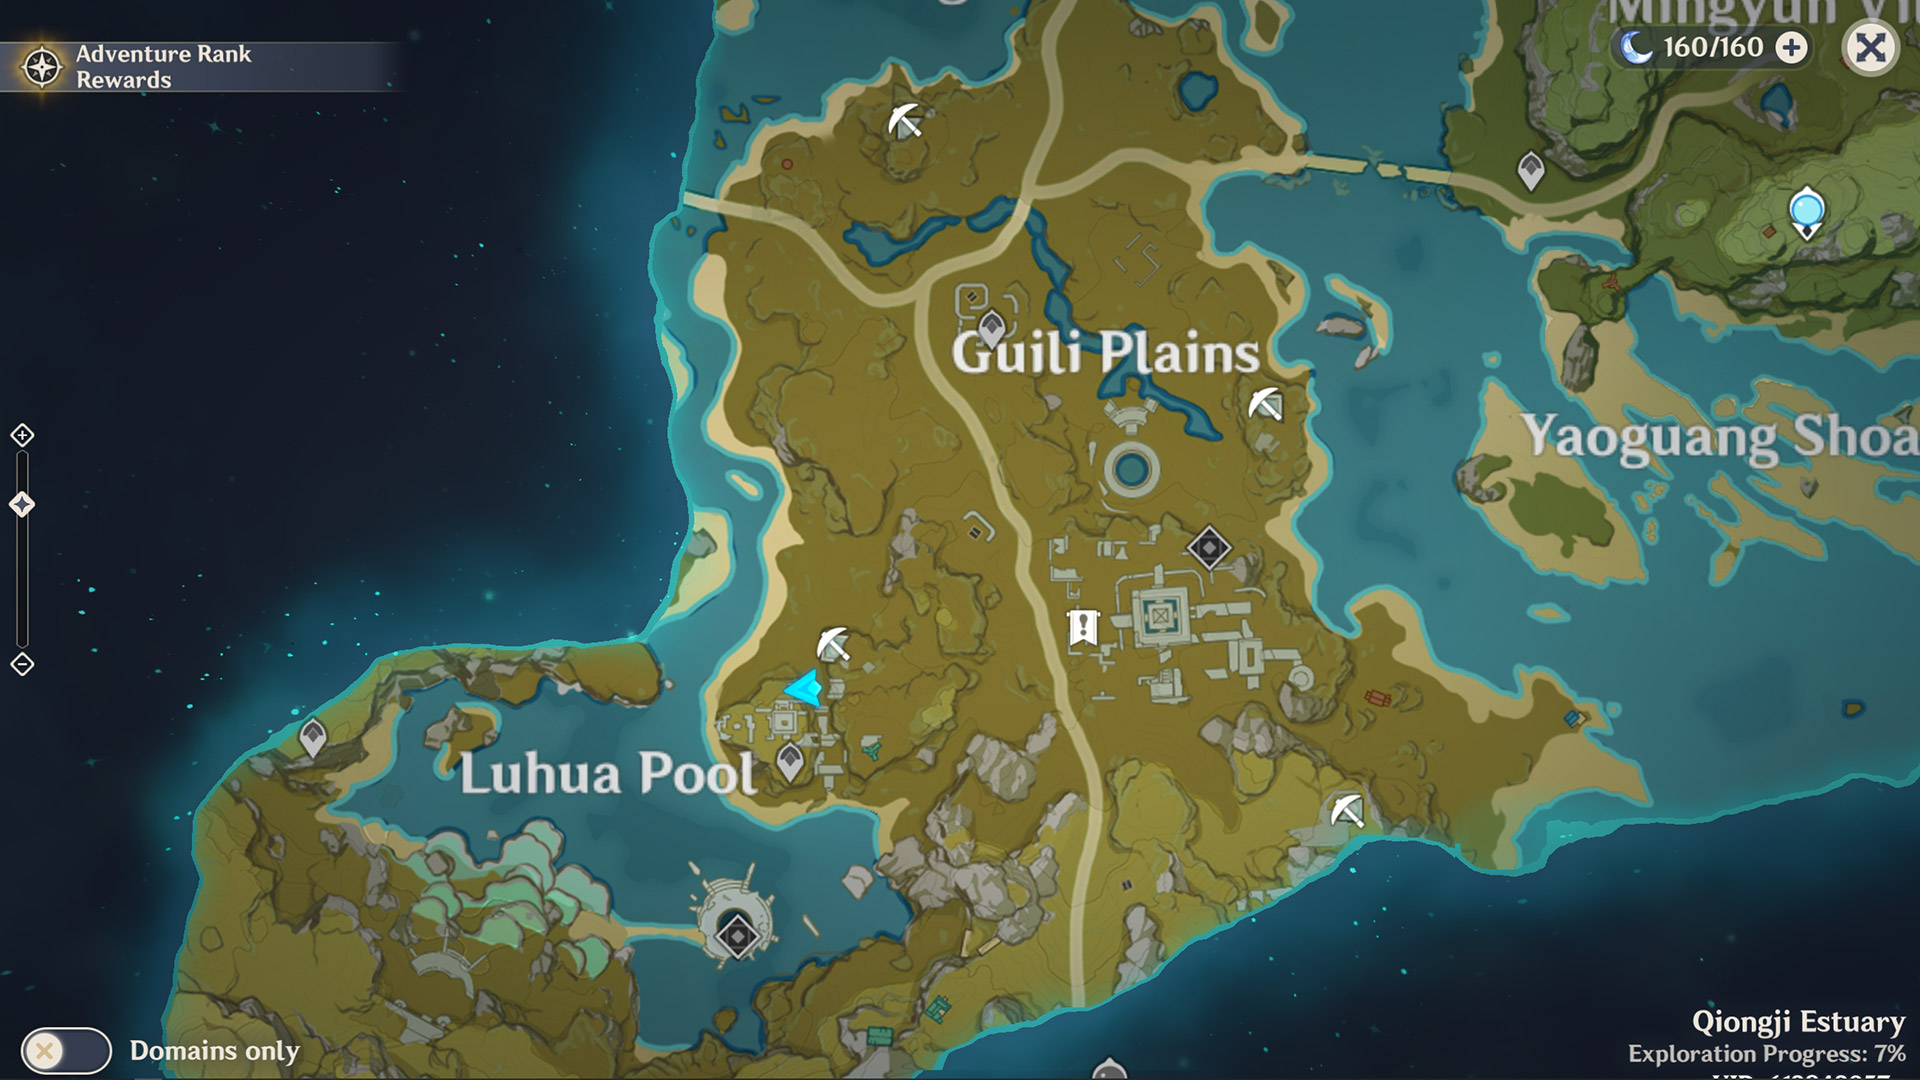 genshin impact treasure lost found quest guide location jade plates